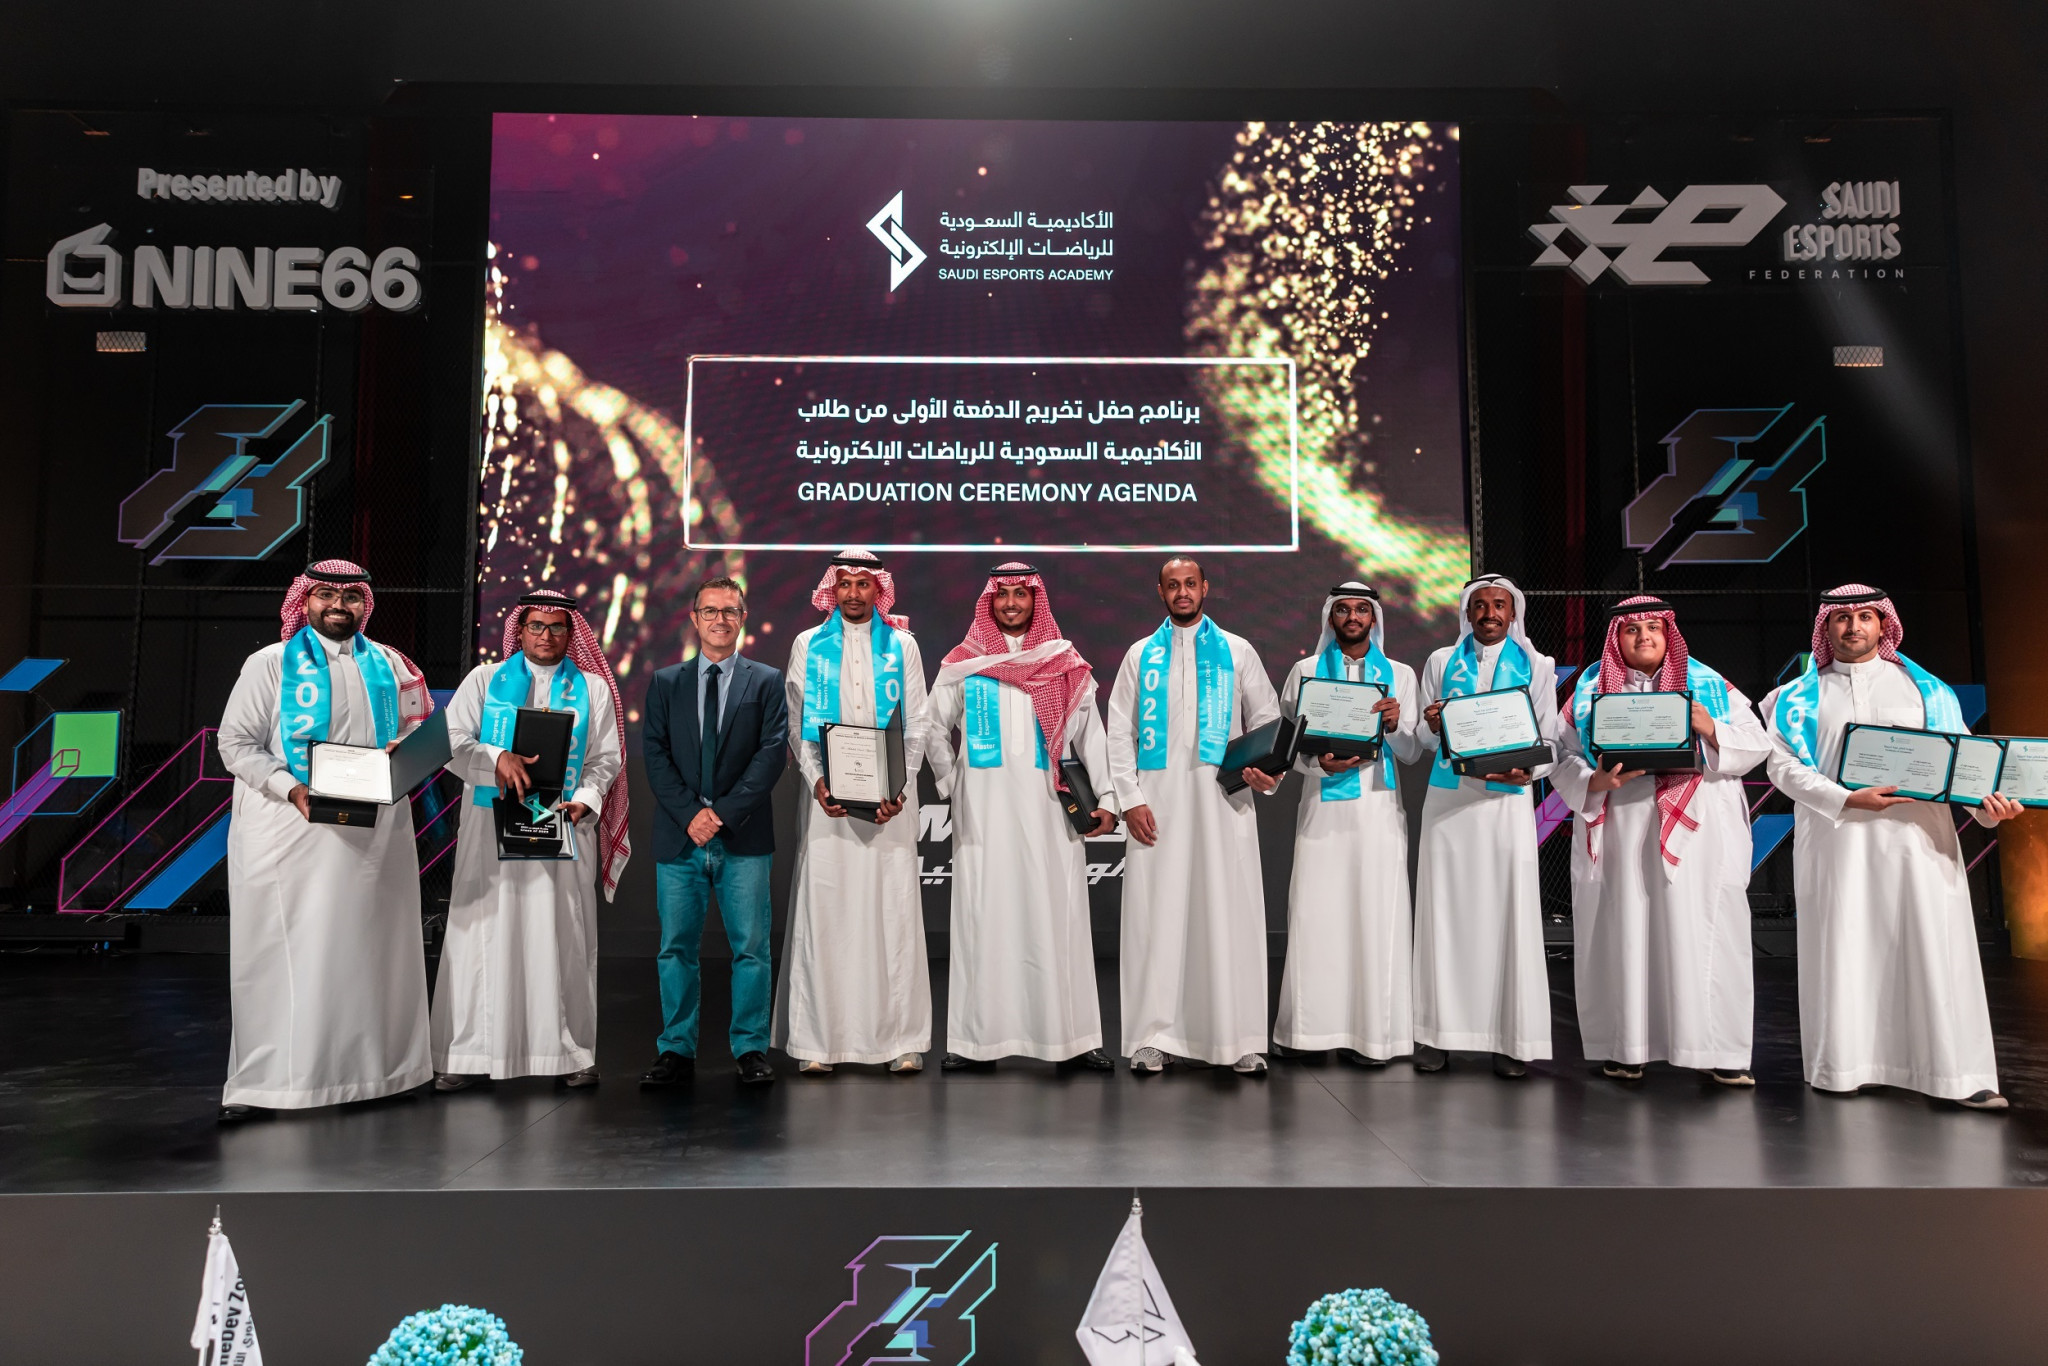 Saudi Esports Academy reaches "milestone" with first batch of graduates